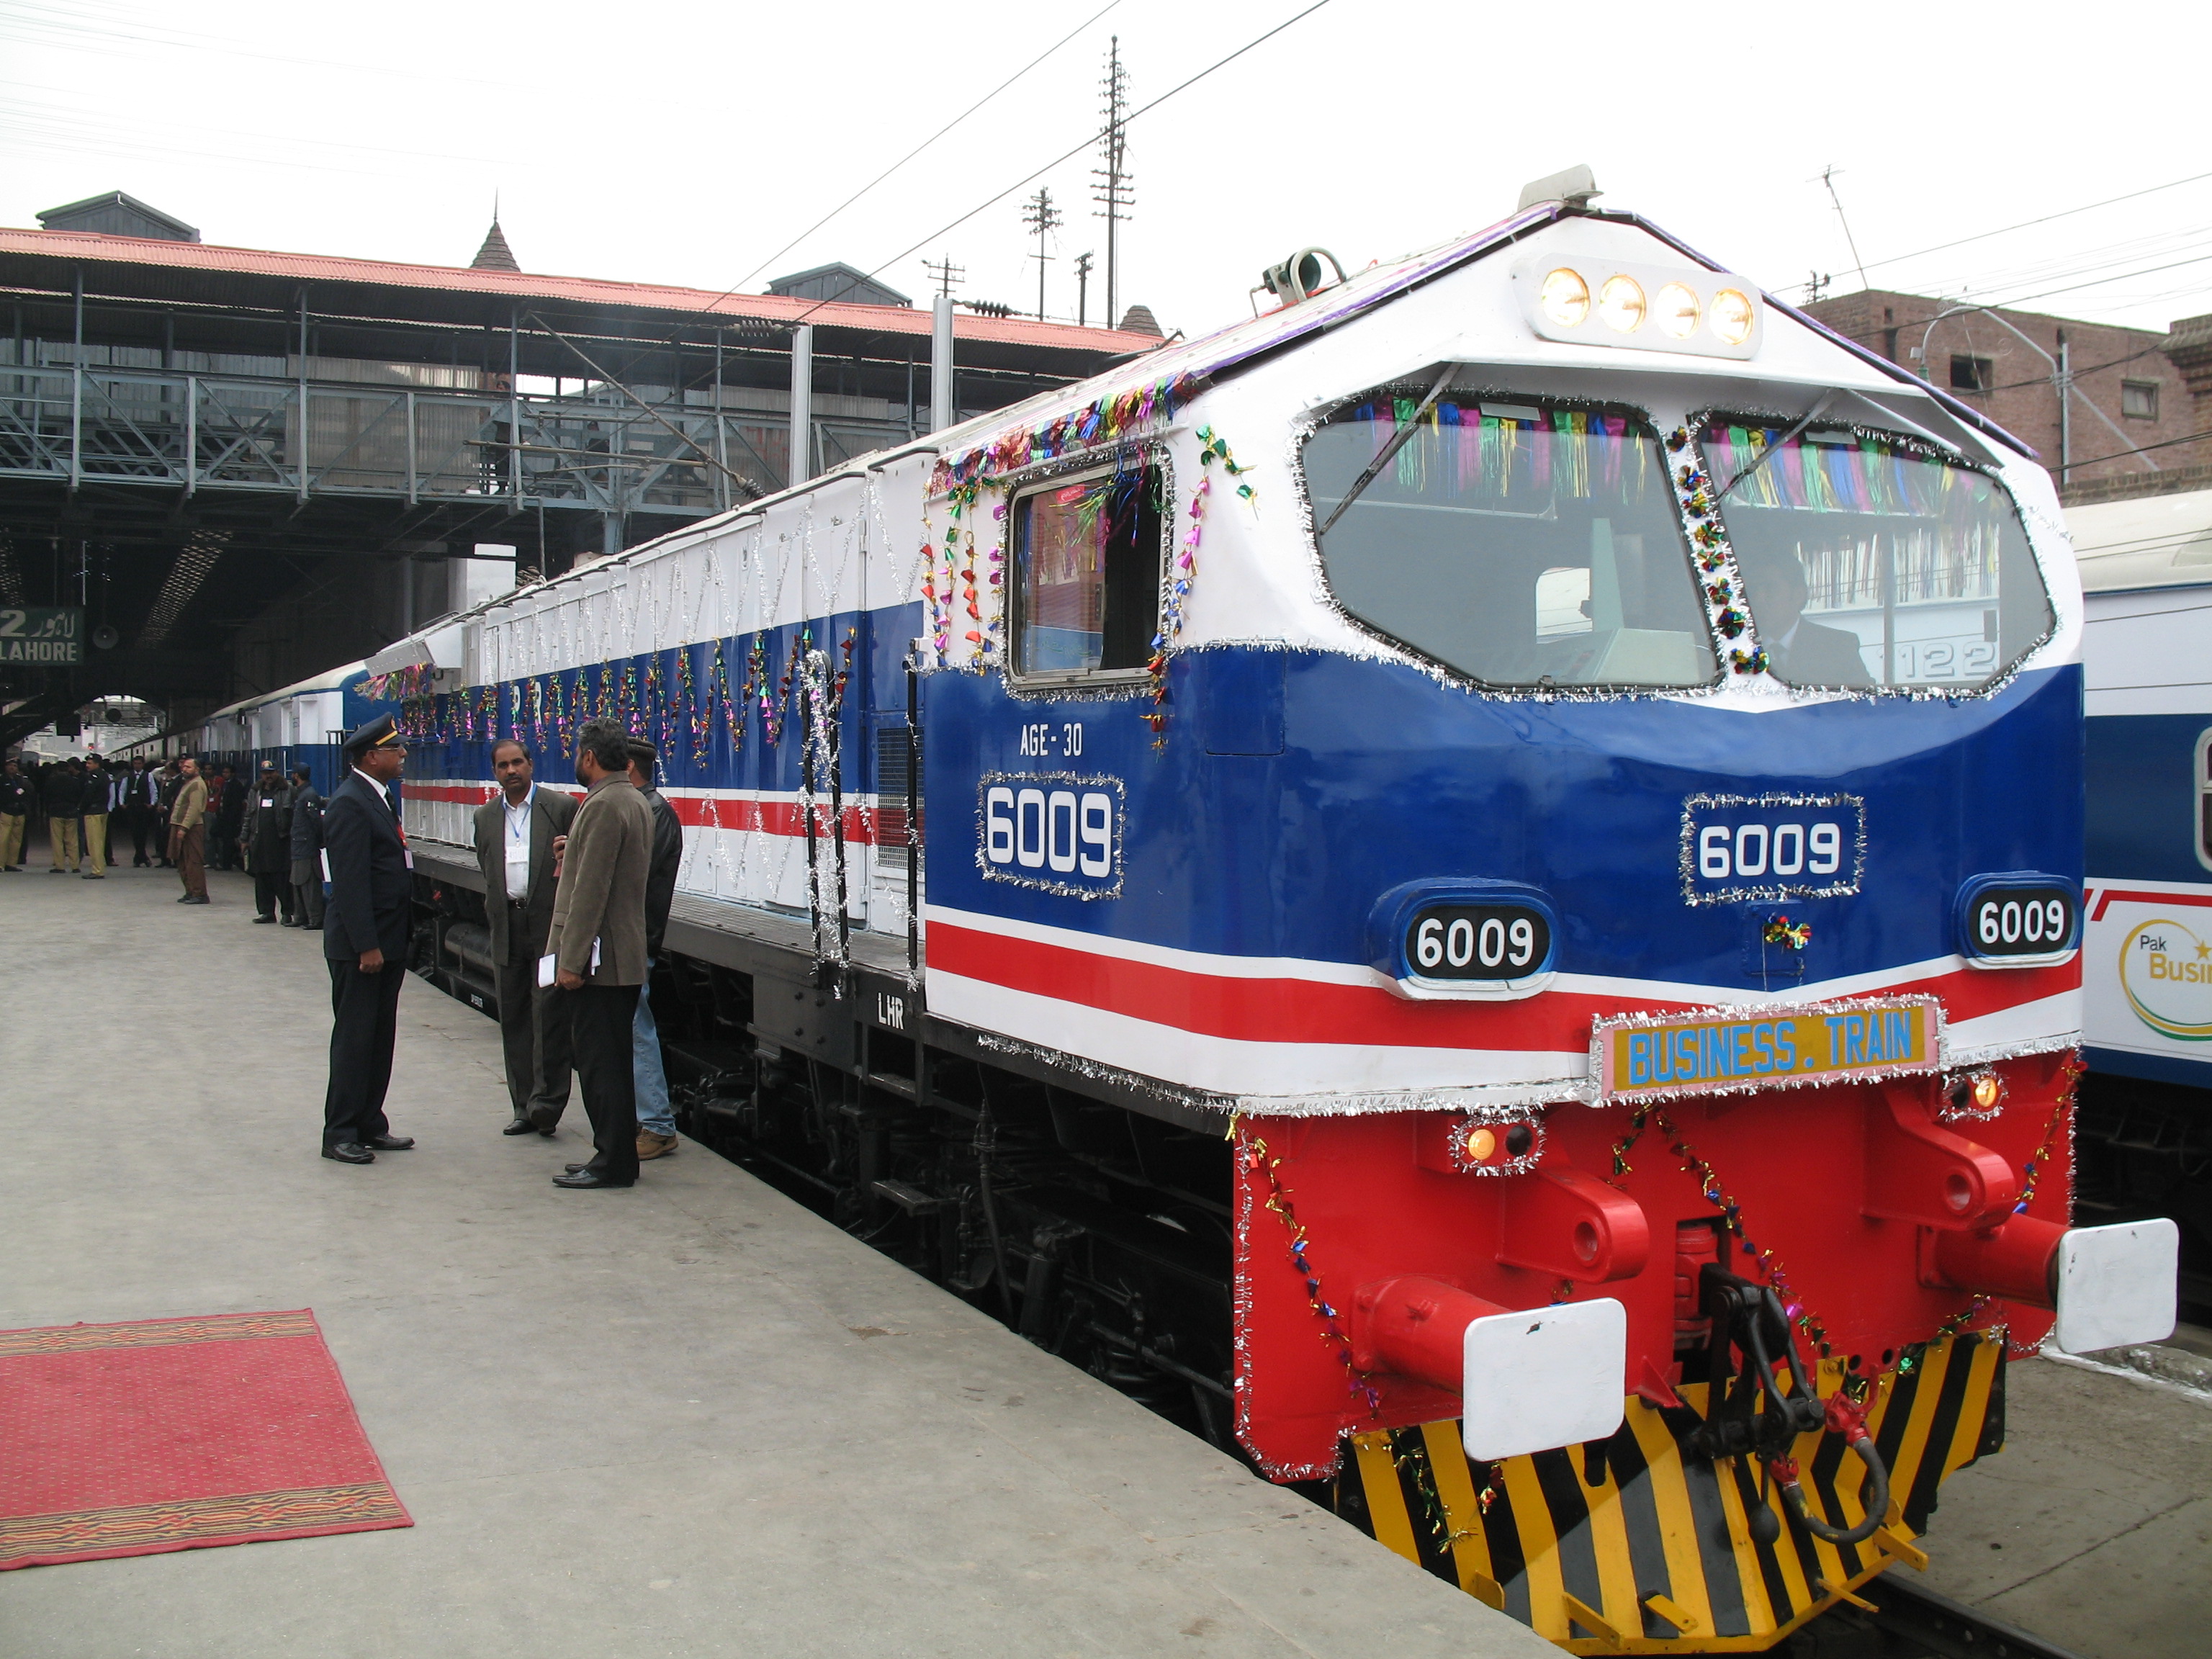 Pakistan Railway decided to run 100 Trains all over Pakistan